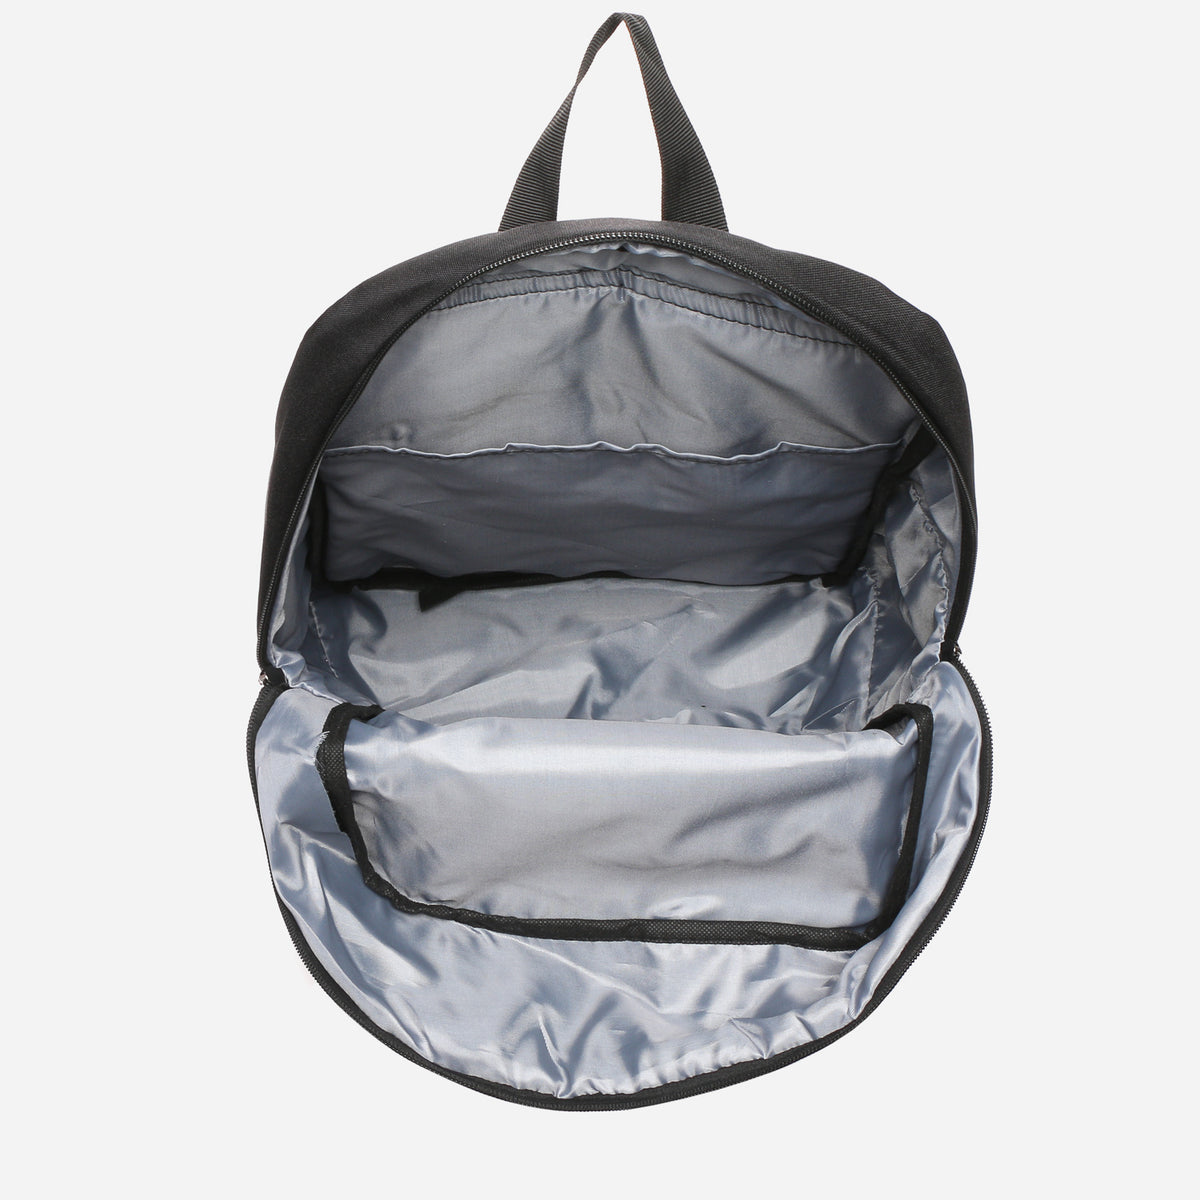 Order Travel Basic black polycanvas backpack | The SM Store